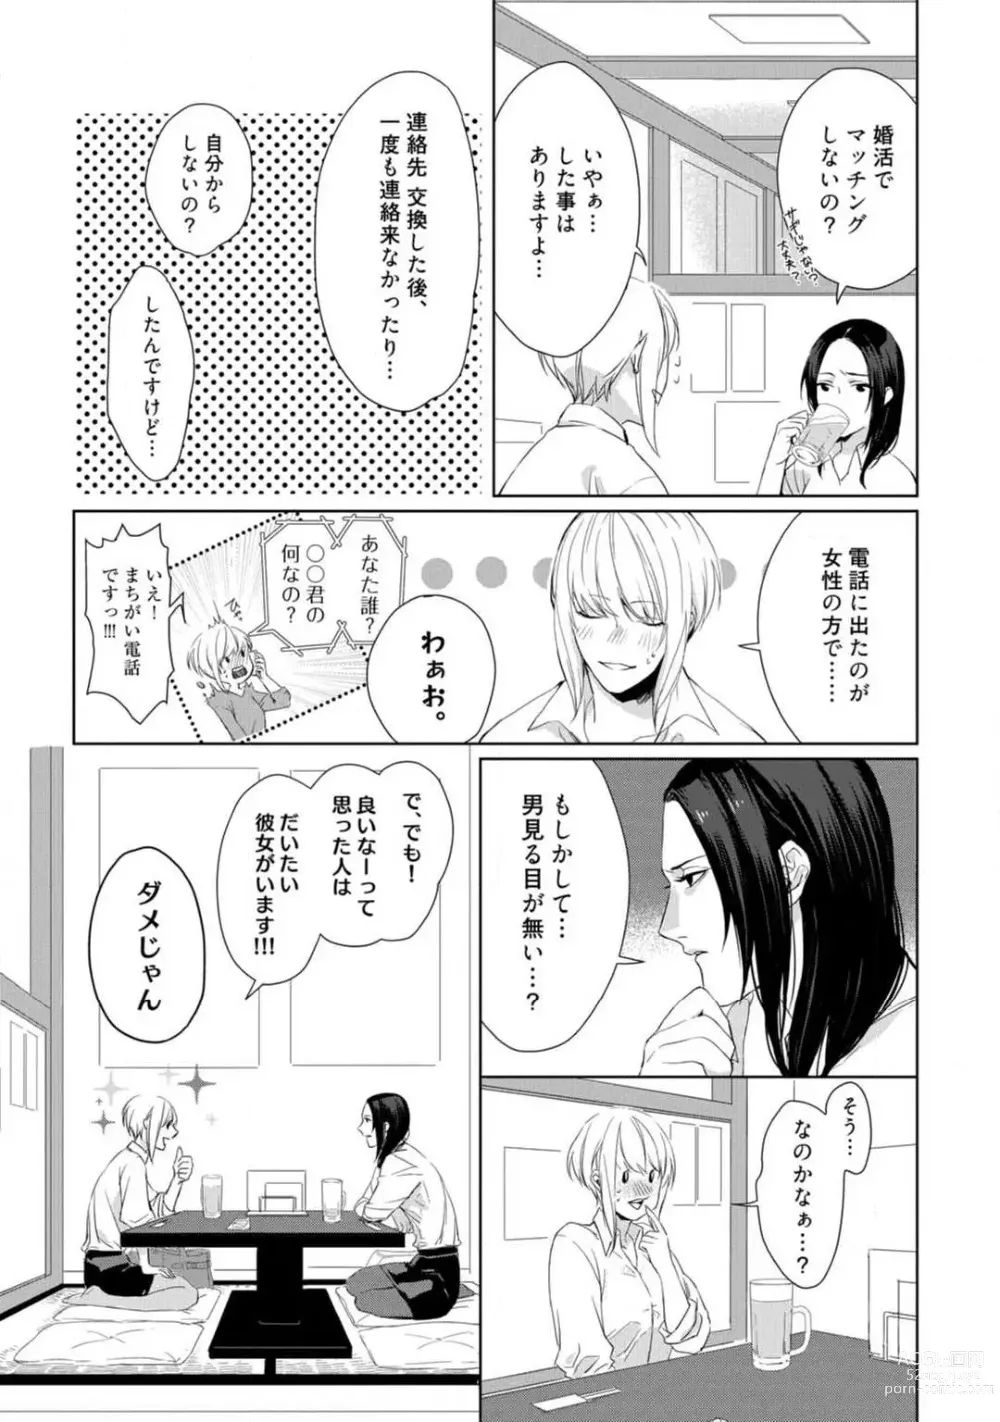 Page 3 of manga Kamidanomi Konkatsu 1-12